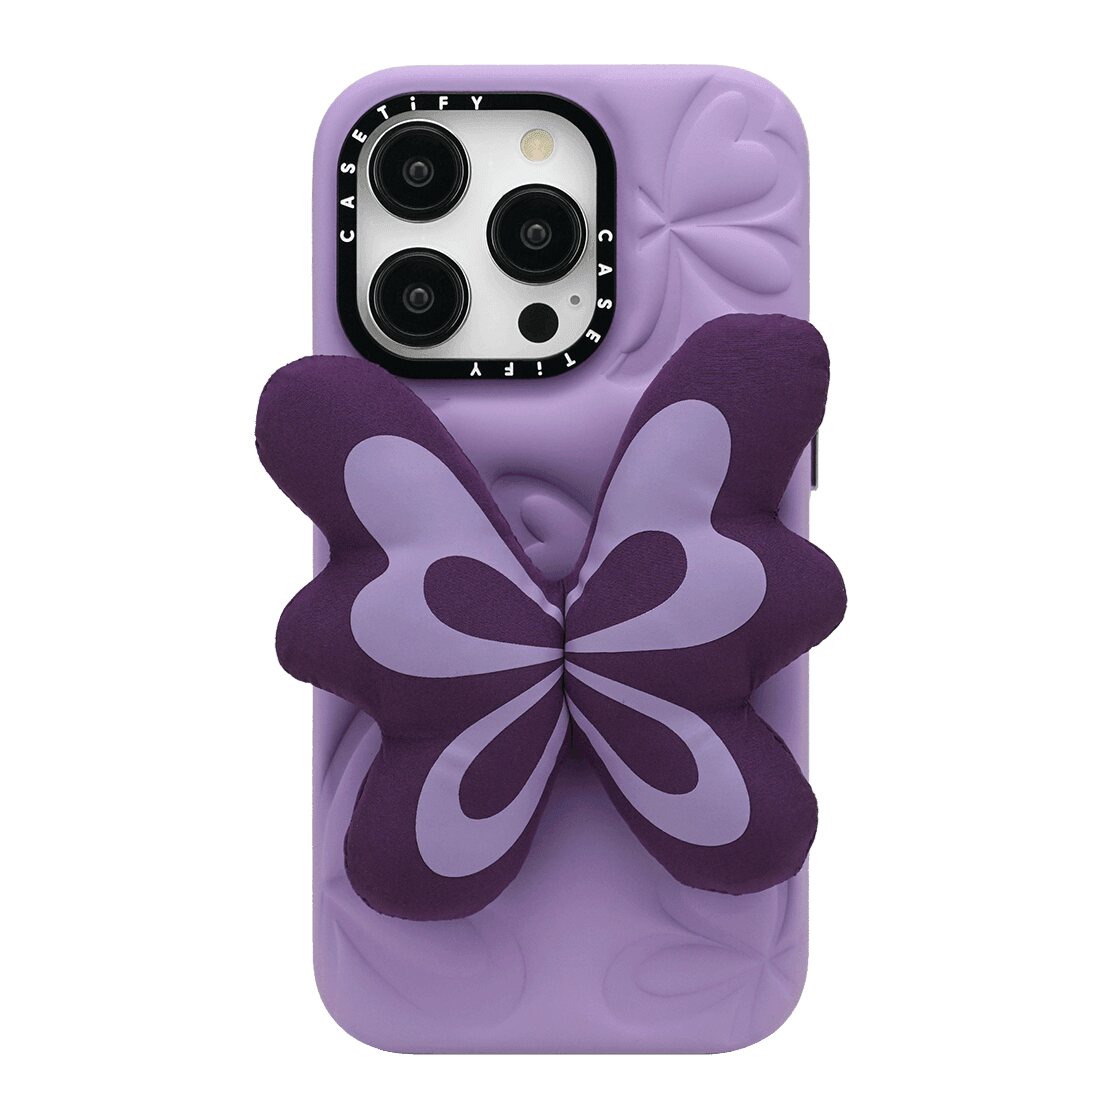 The Grippy Case - Violet Butterfly para 'Speak Now' | Foto: Casetify